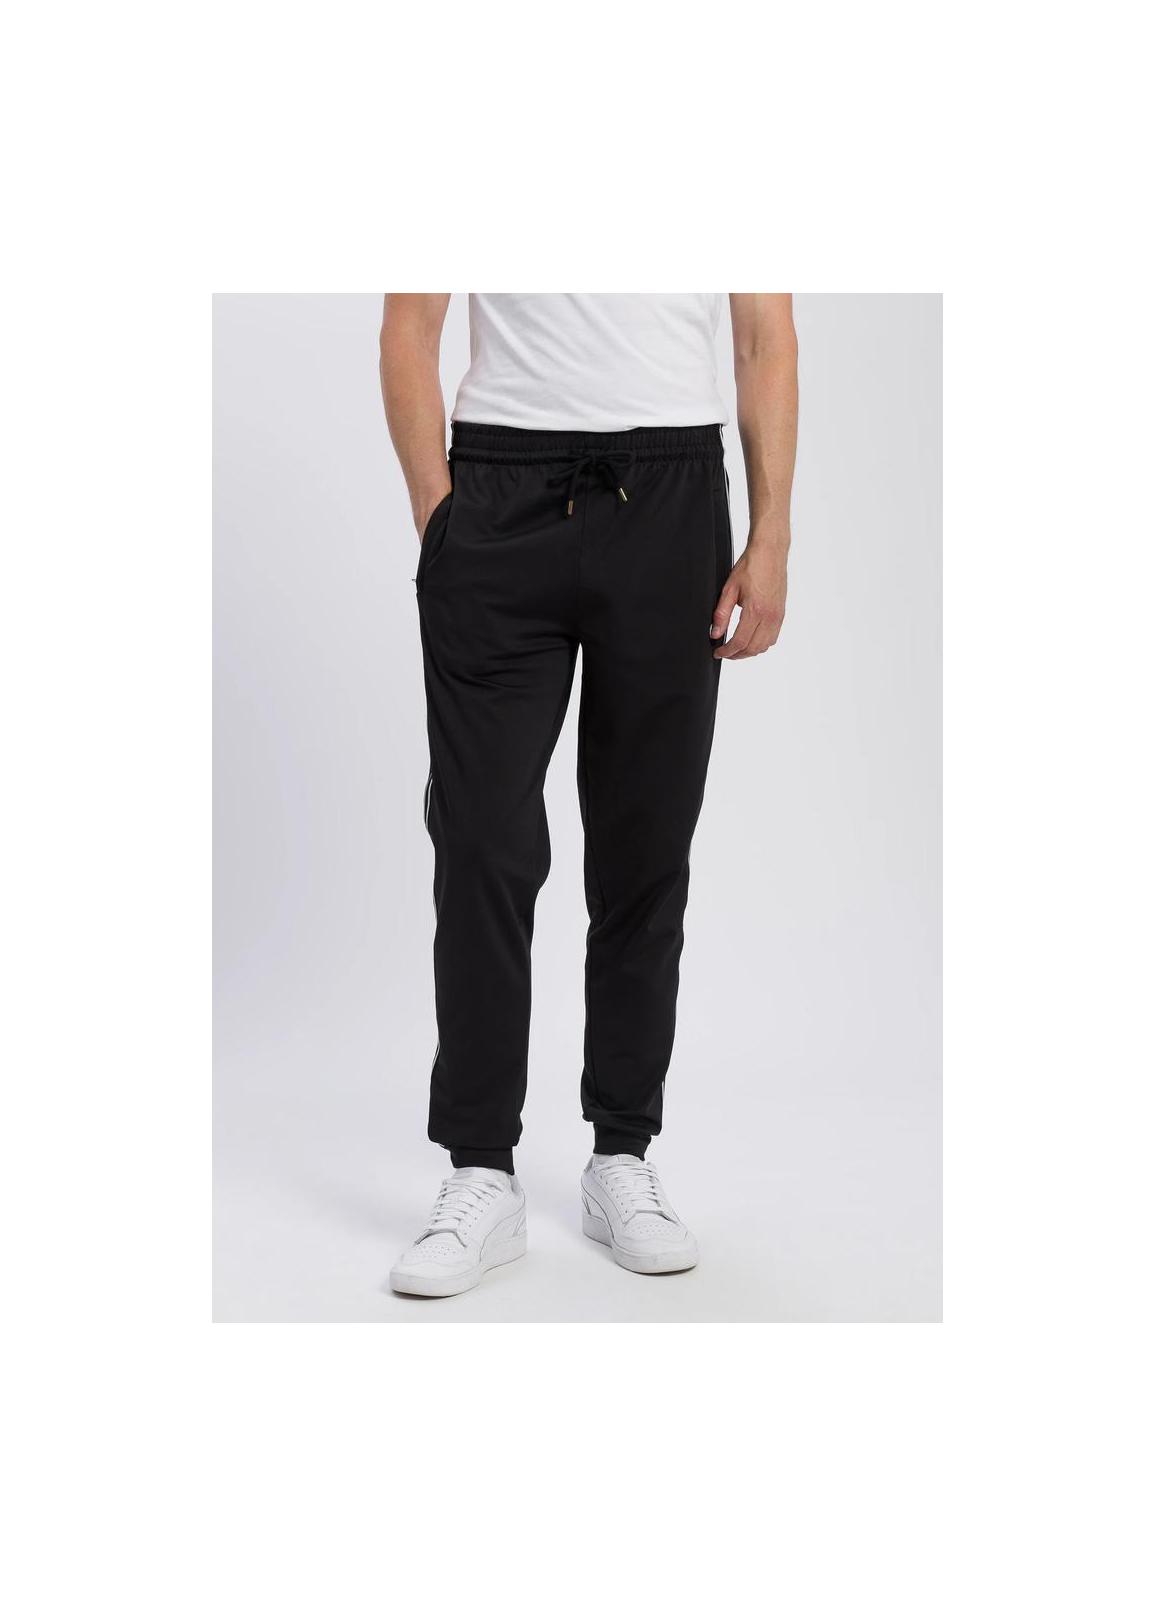 Cross Jeans® Jogger Fit - Black (020)